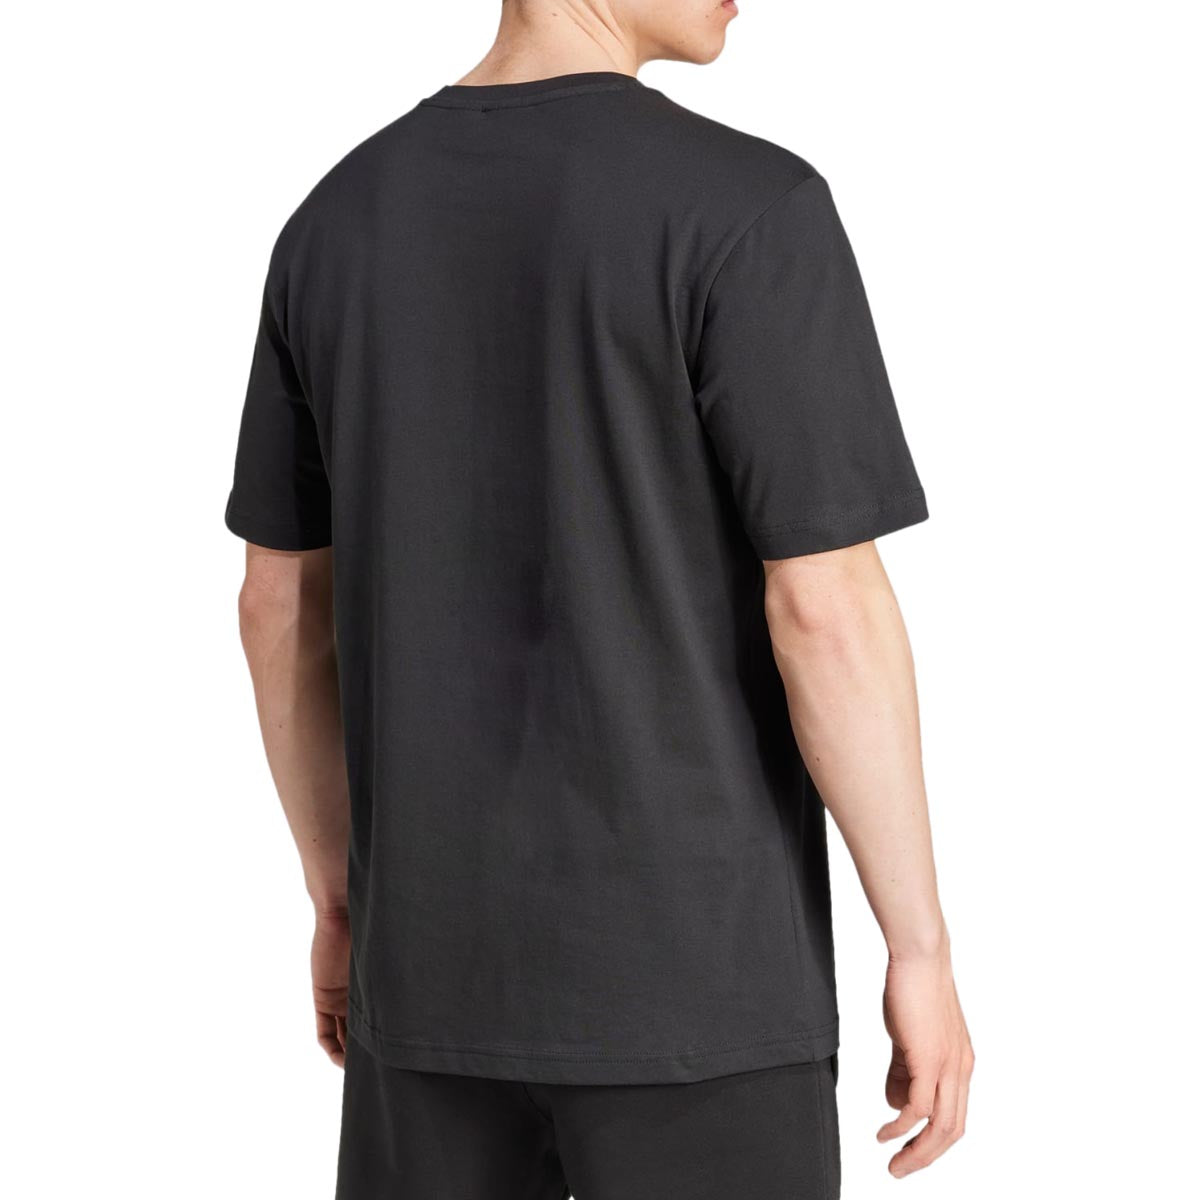 Adidas Street T-Shirt - Black image 3